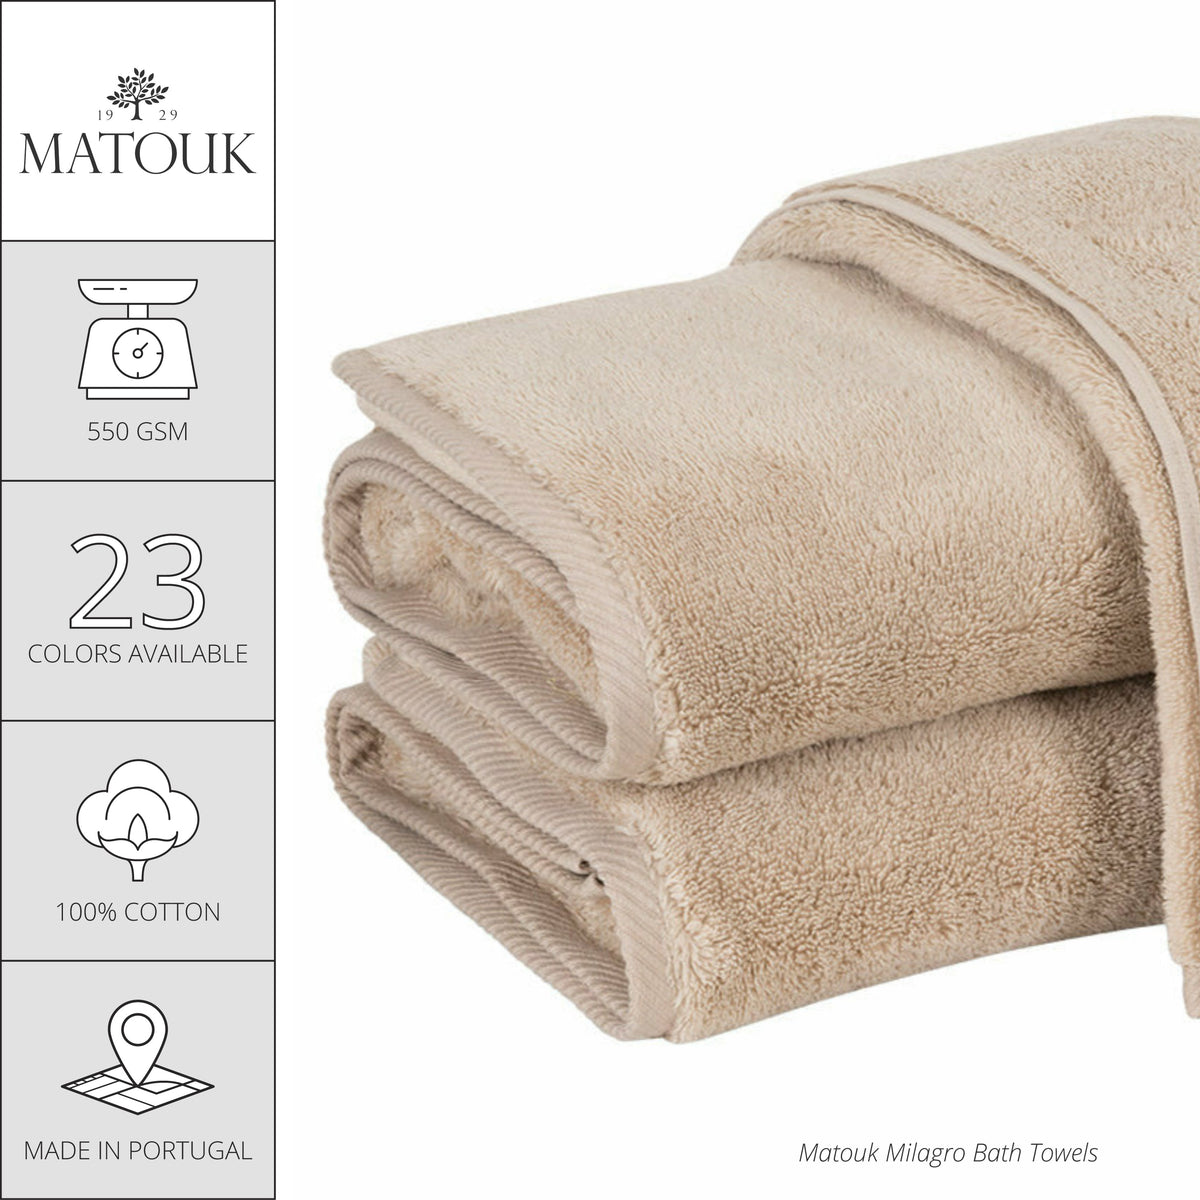 Matouk Milagro Bath Towels and Mats - Cerulean